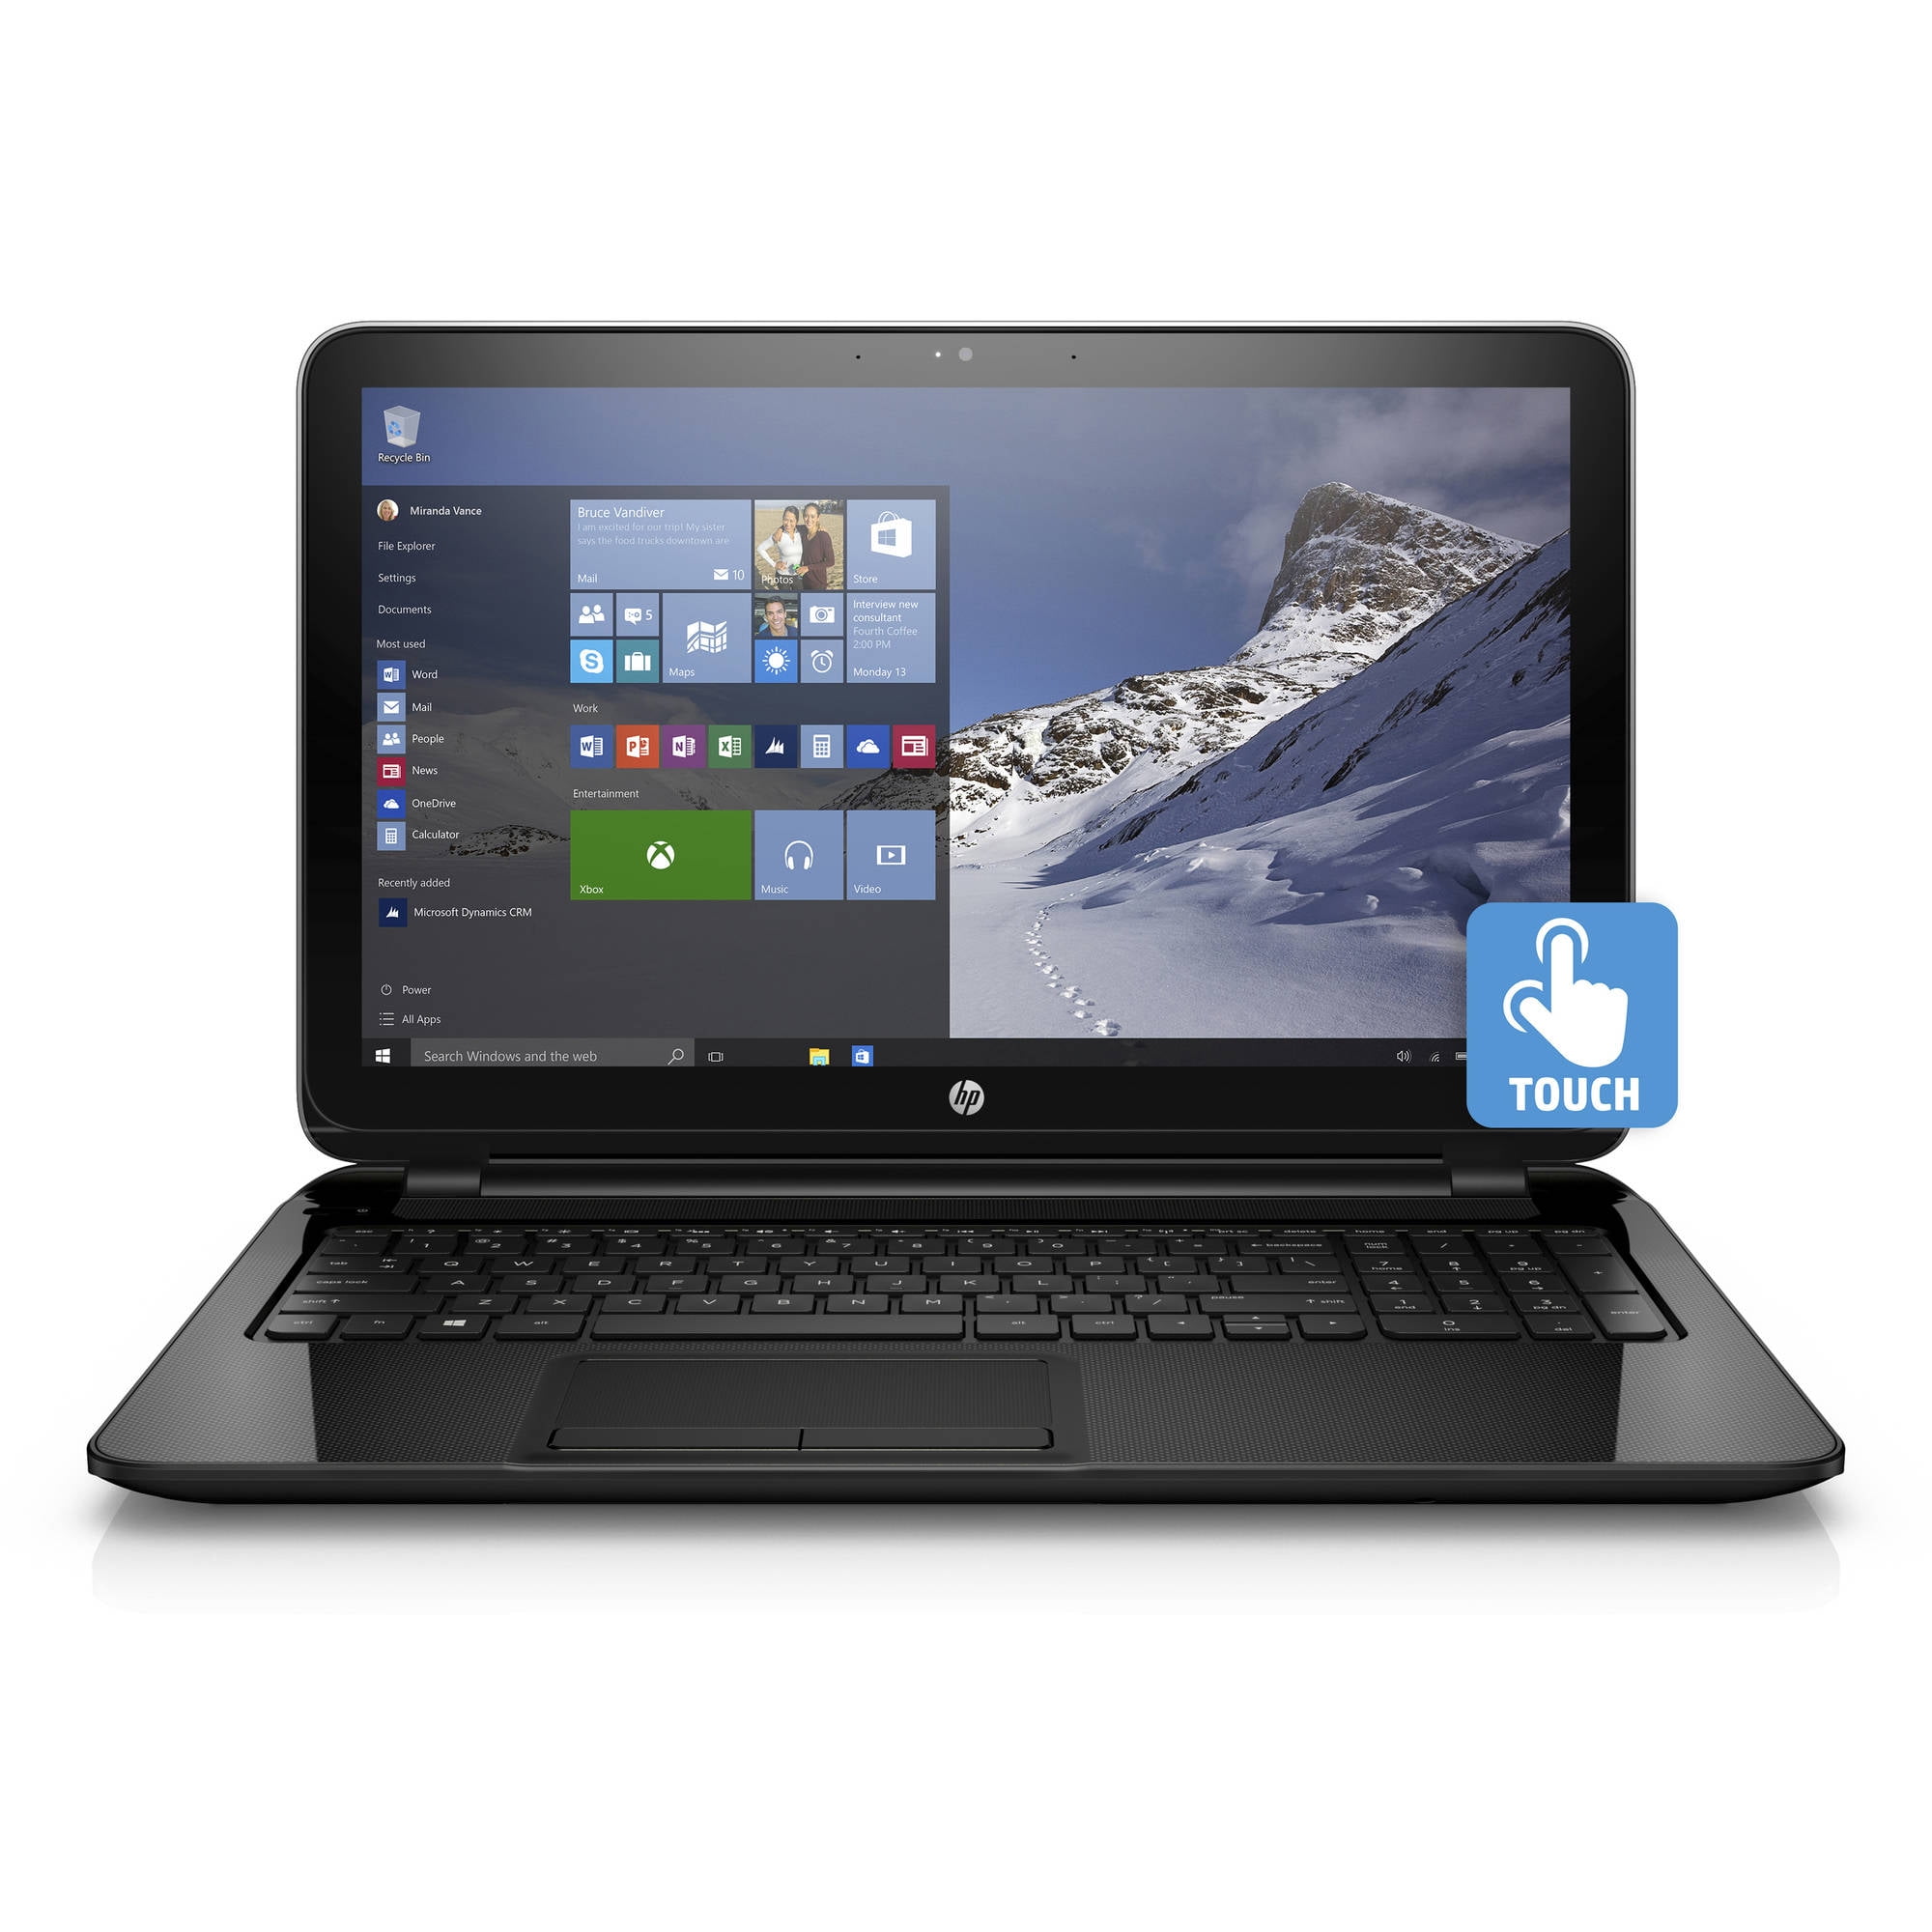 HP Black 15.6" 15-f337wm Laptop PC with AMD A8-6410